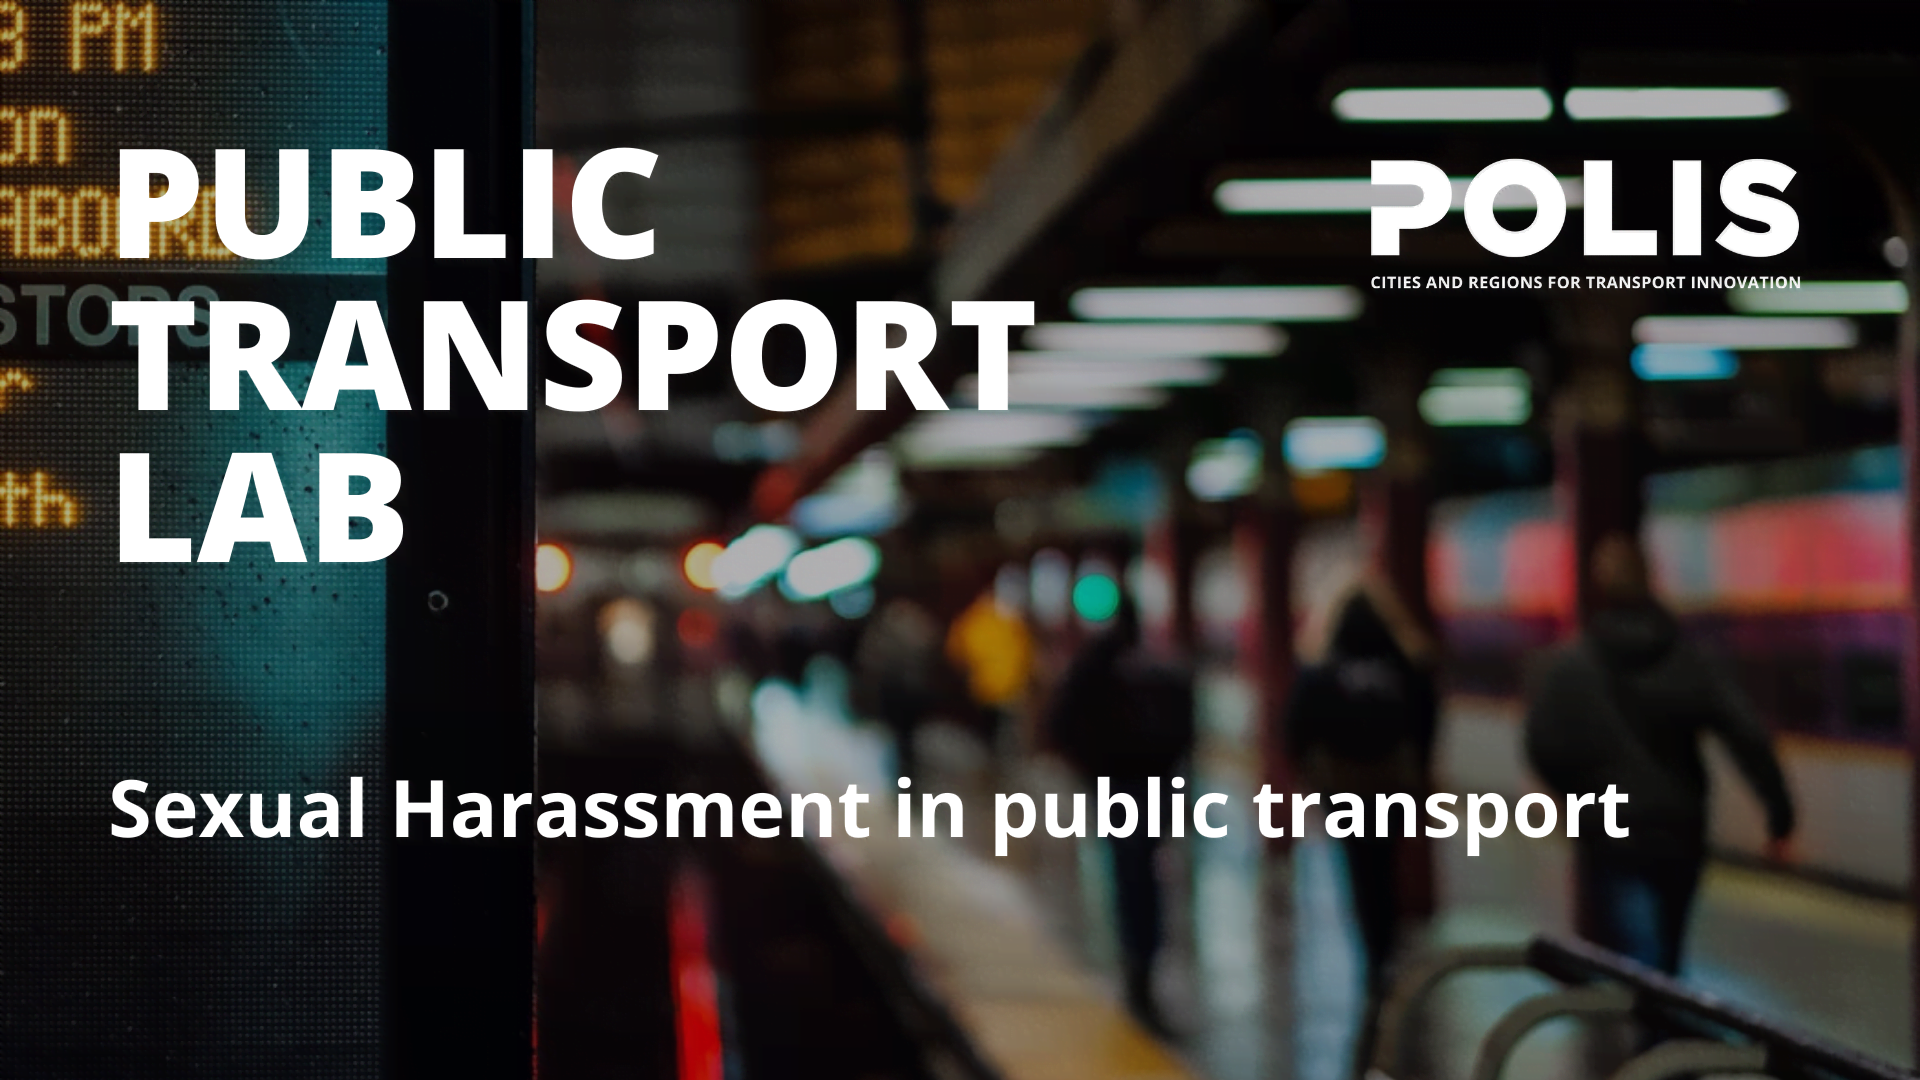 Public Transport Lab addresses sexual harassment on Public Transport